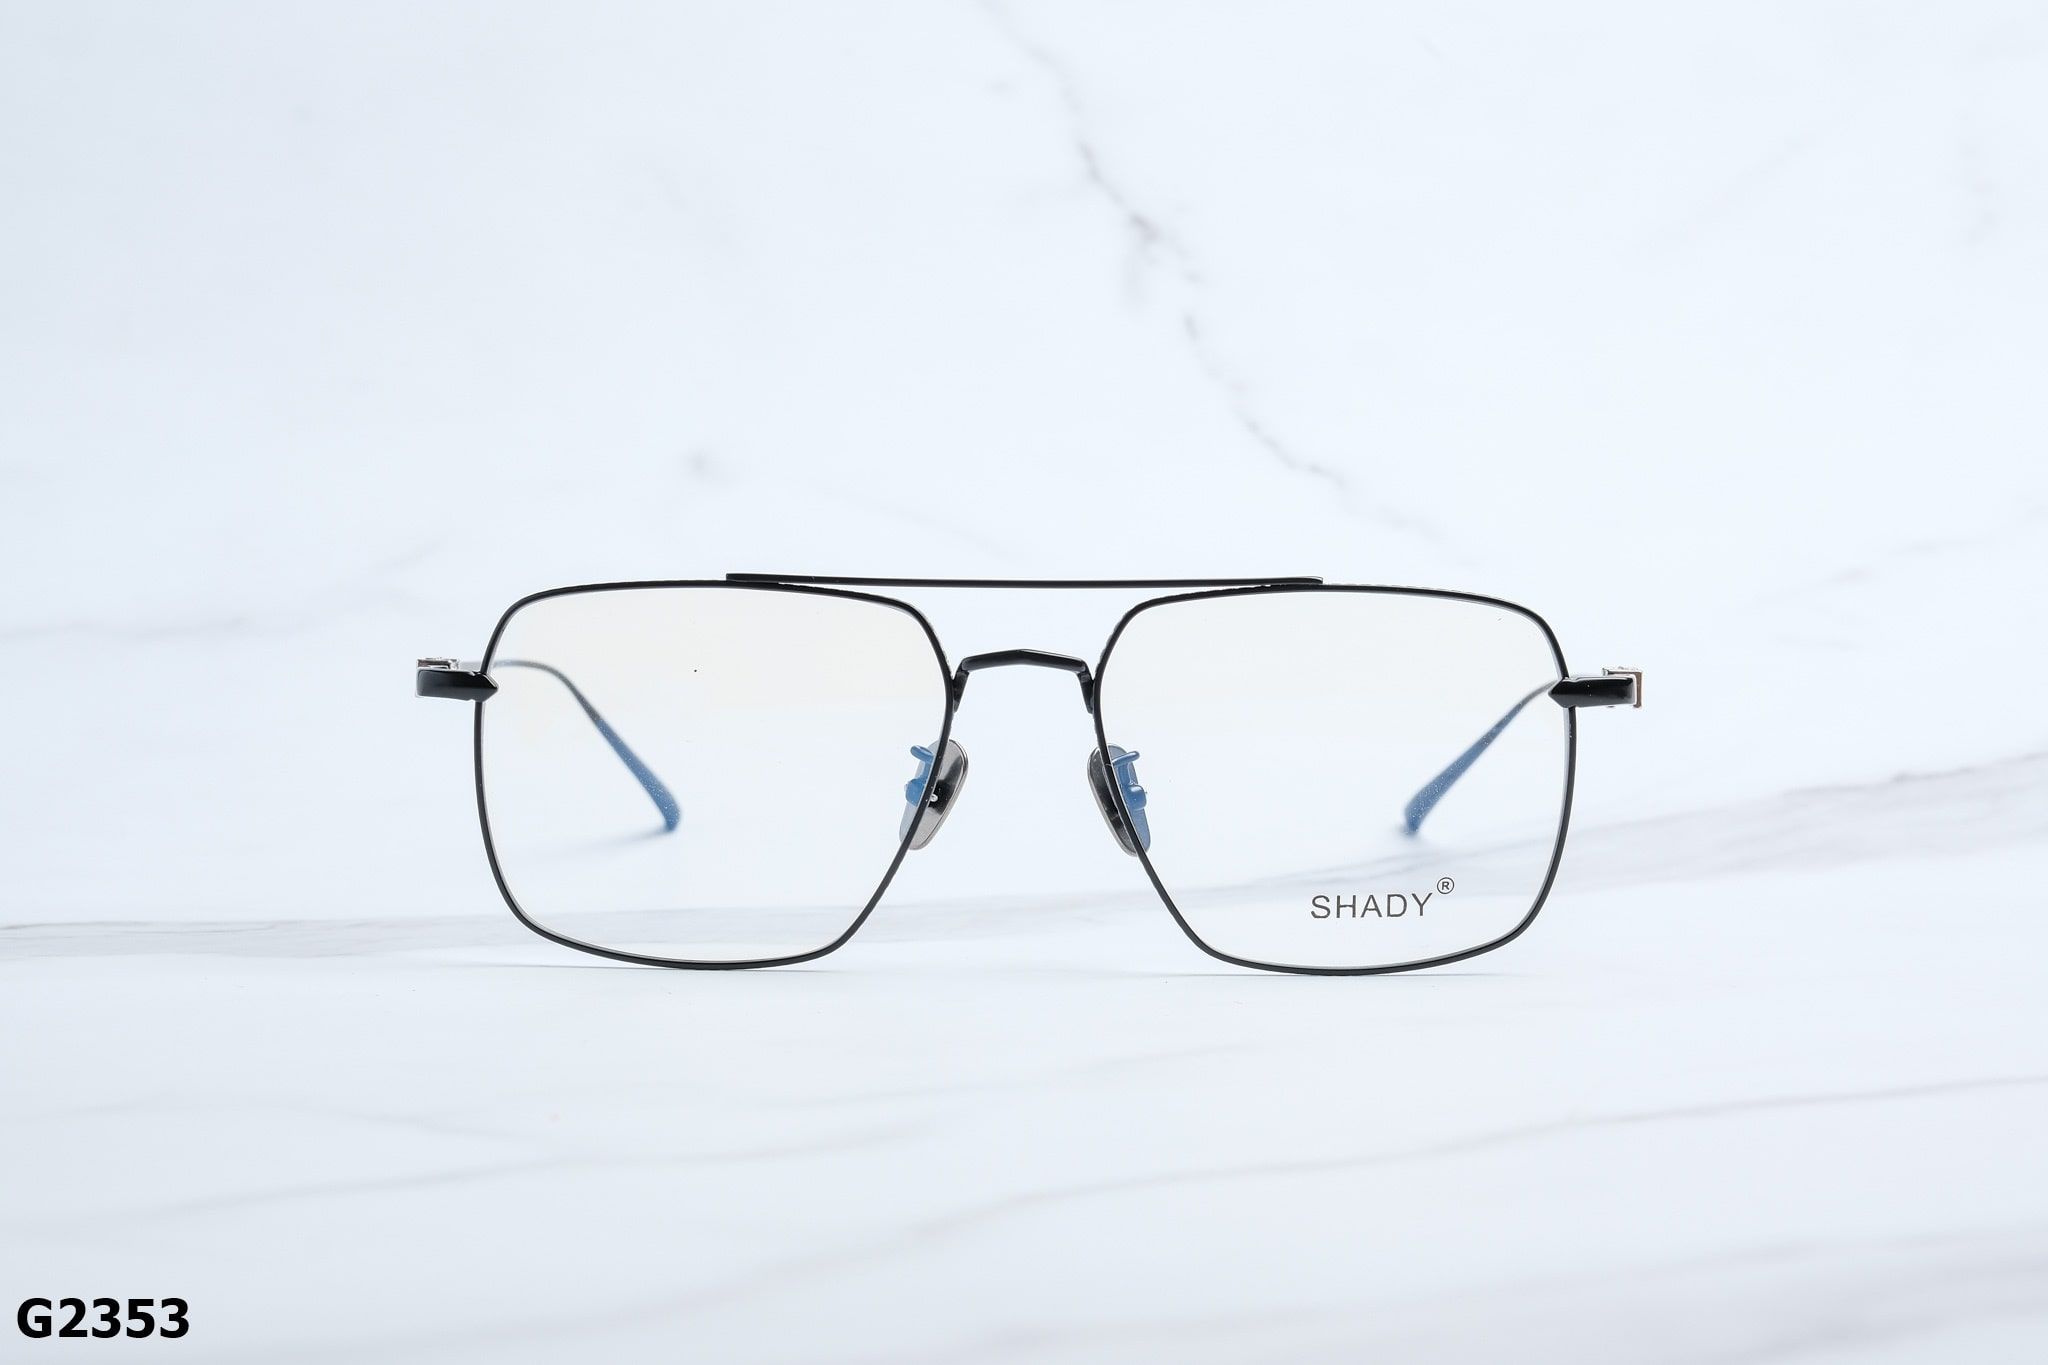  SHADY Eyewear - Glasses - G2353 